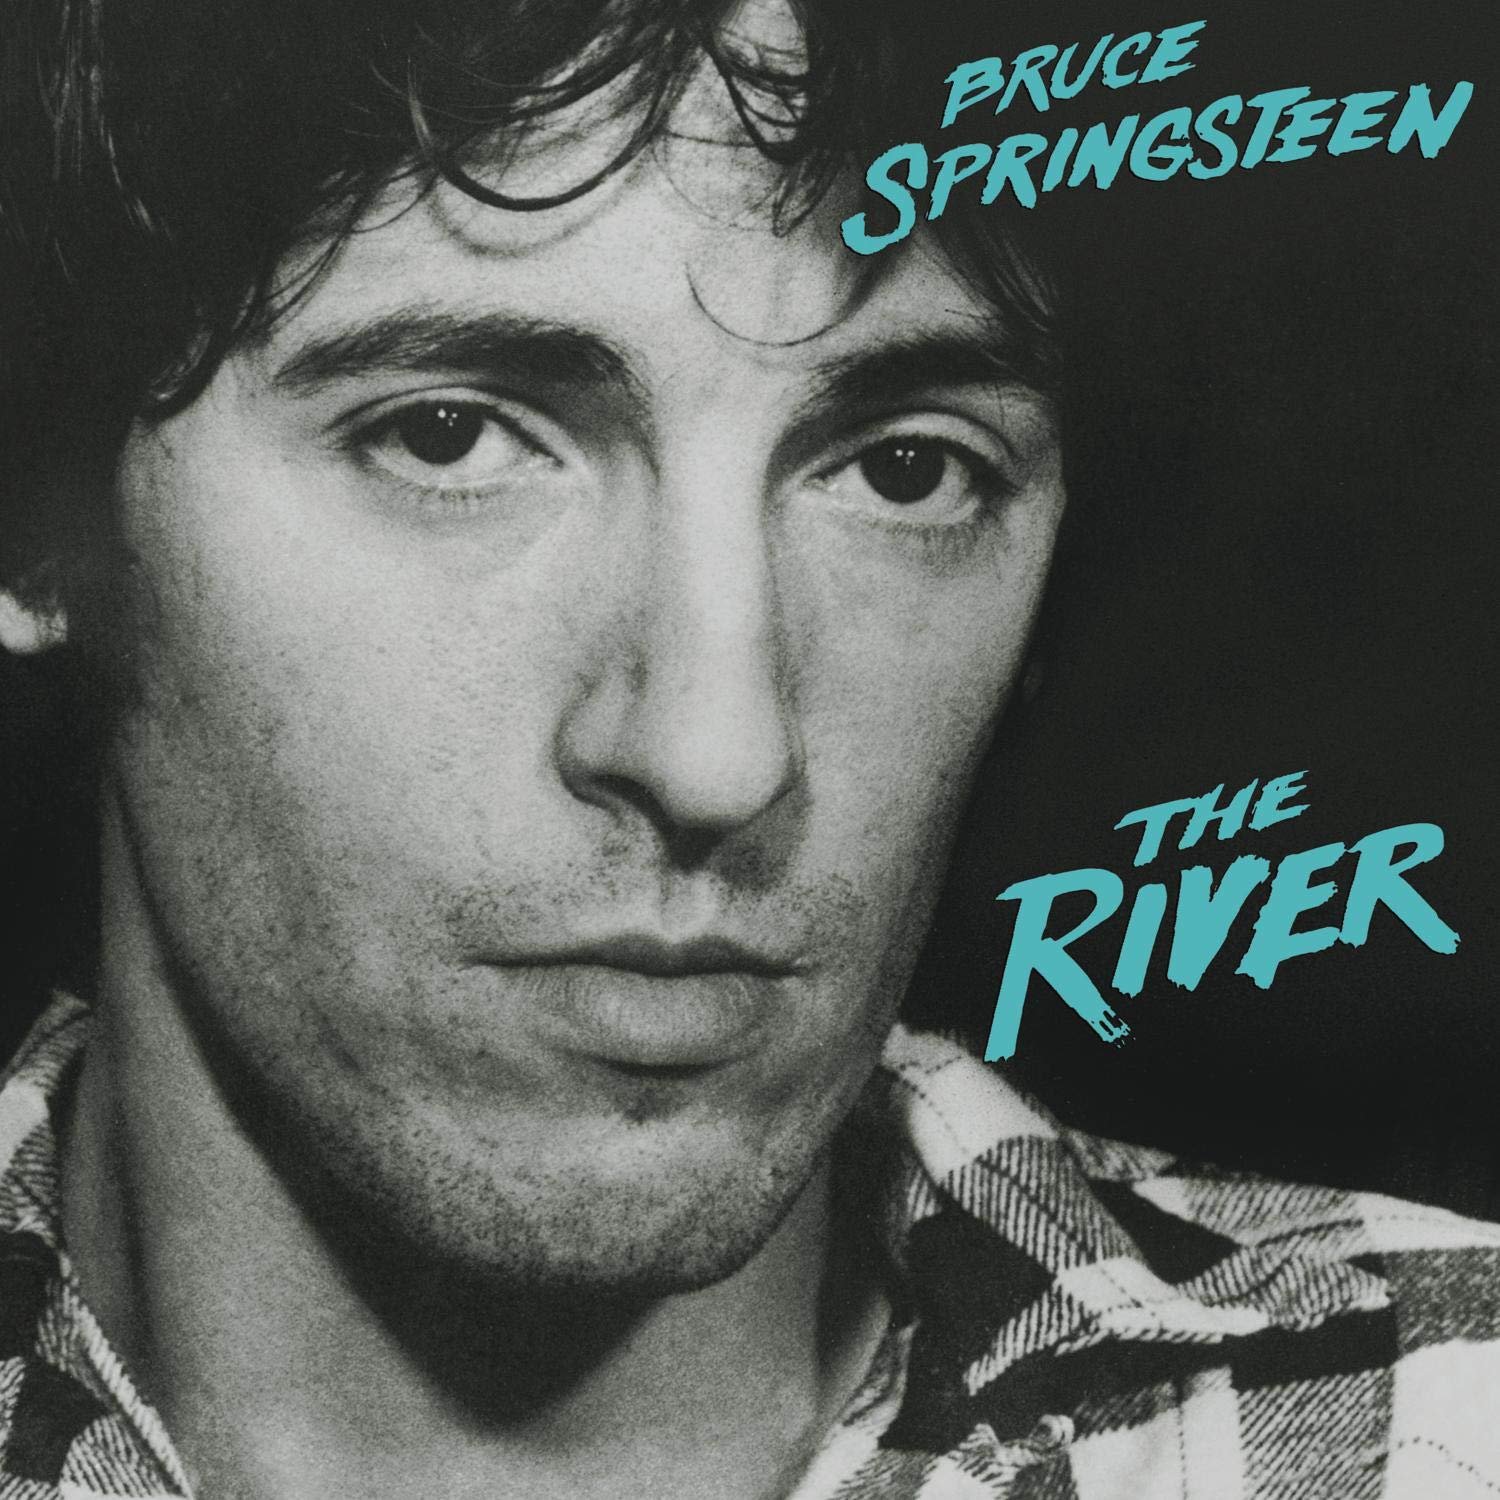 Read more about the article Godišnjica objavljivanja dvostrukog albuma The River Brucea Springsteena